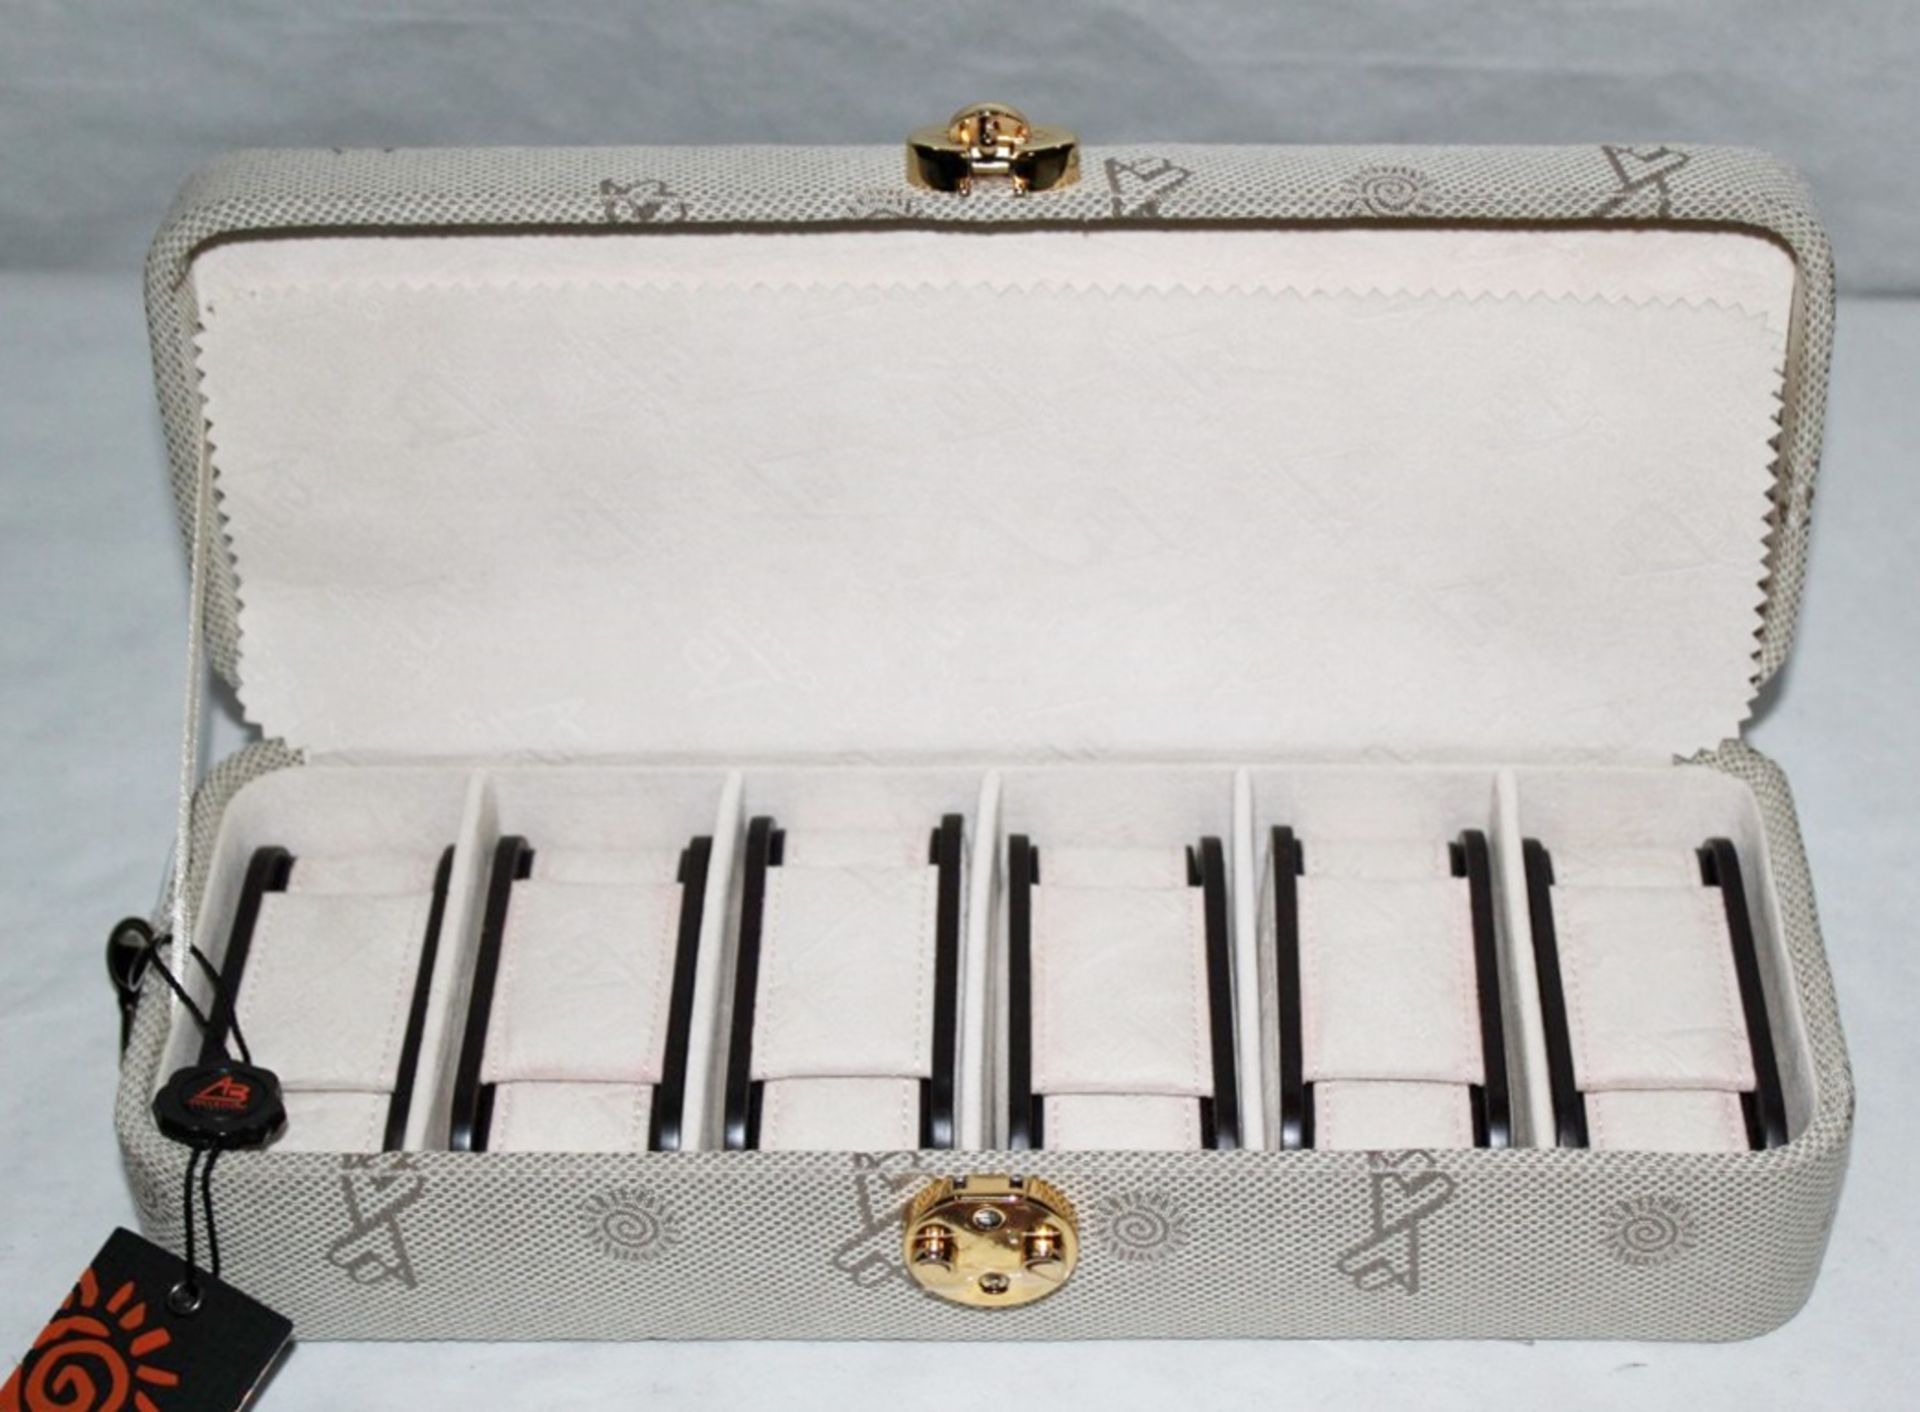 1 x "AB Collezioni" Italian Luxury Watch Case (34043) - Ref LT150 – 6 Compartments In A Beautiful